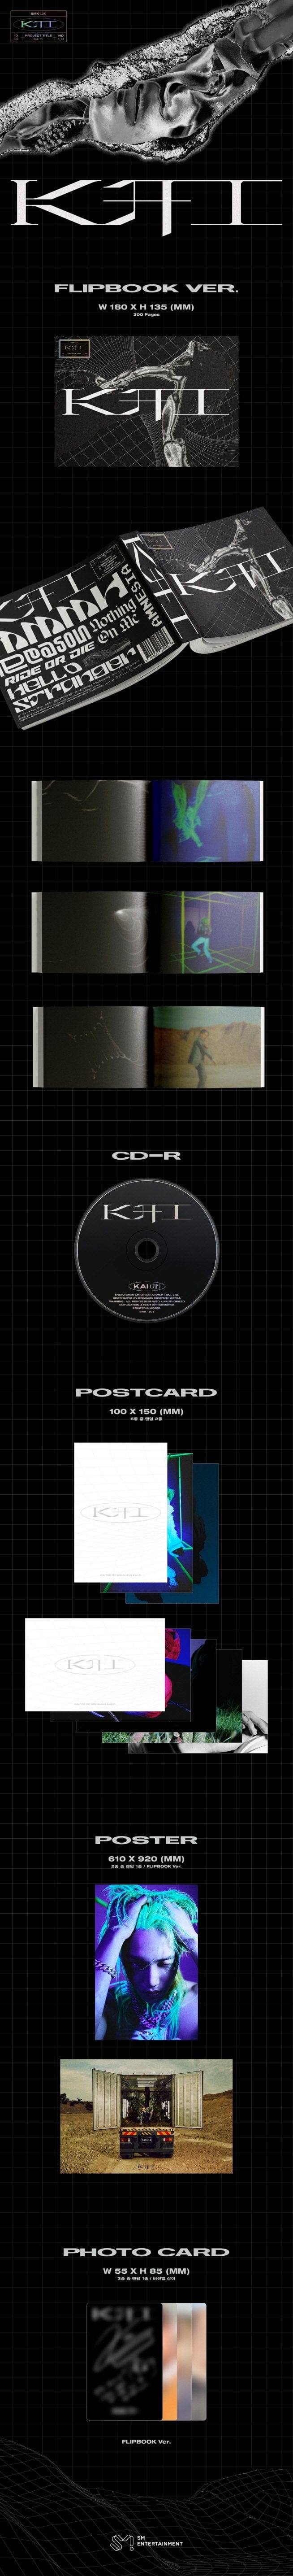 Korea Pop Store KAI - KAI (1ST MINI ALBUM) FLIP BOOK VER. Kawaii Gifts 8809633189456